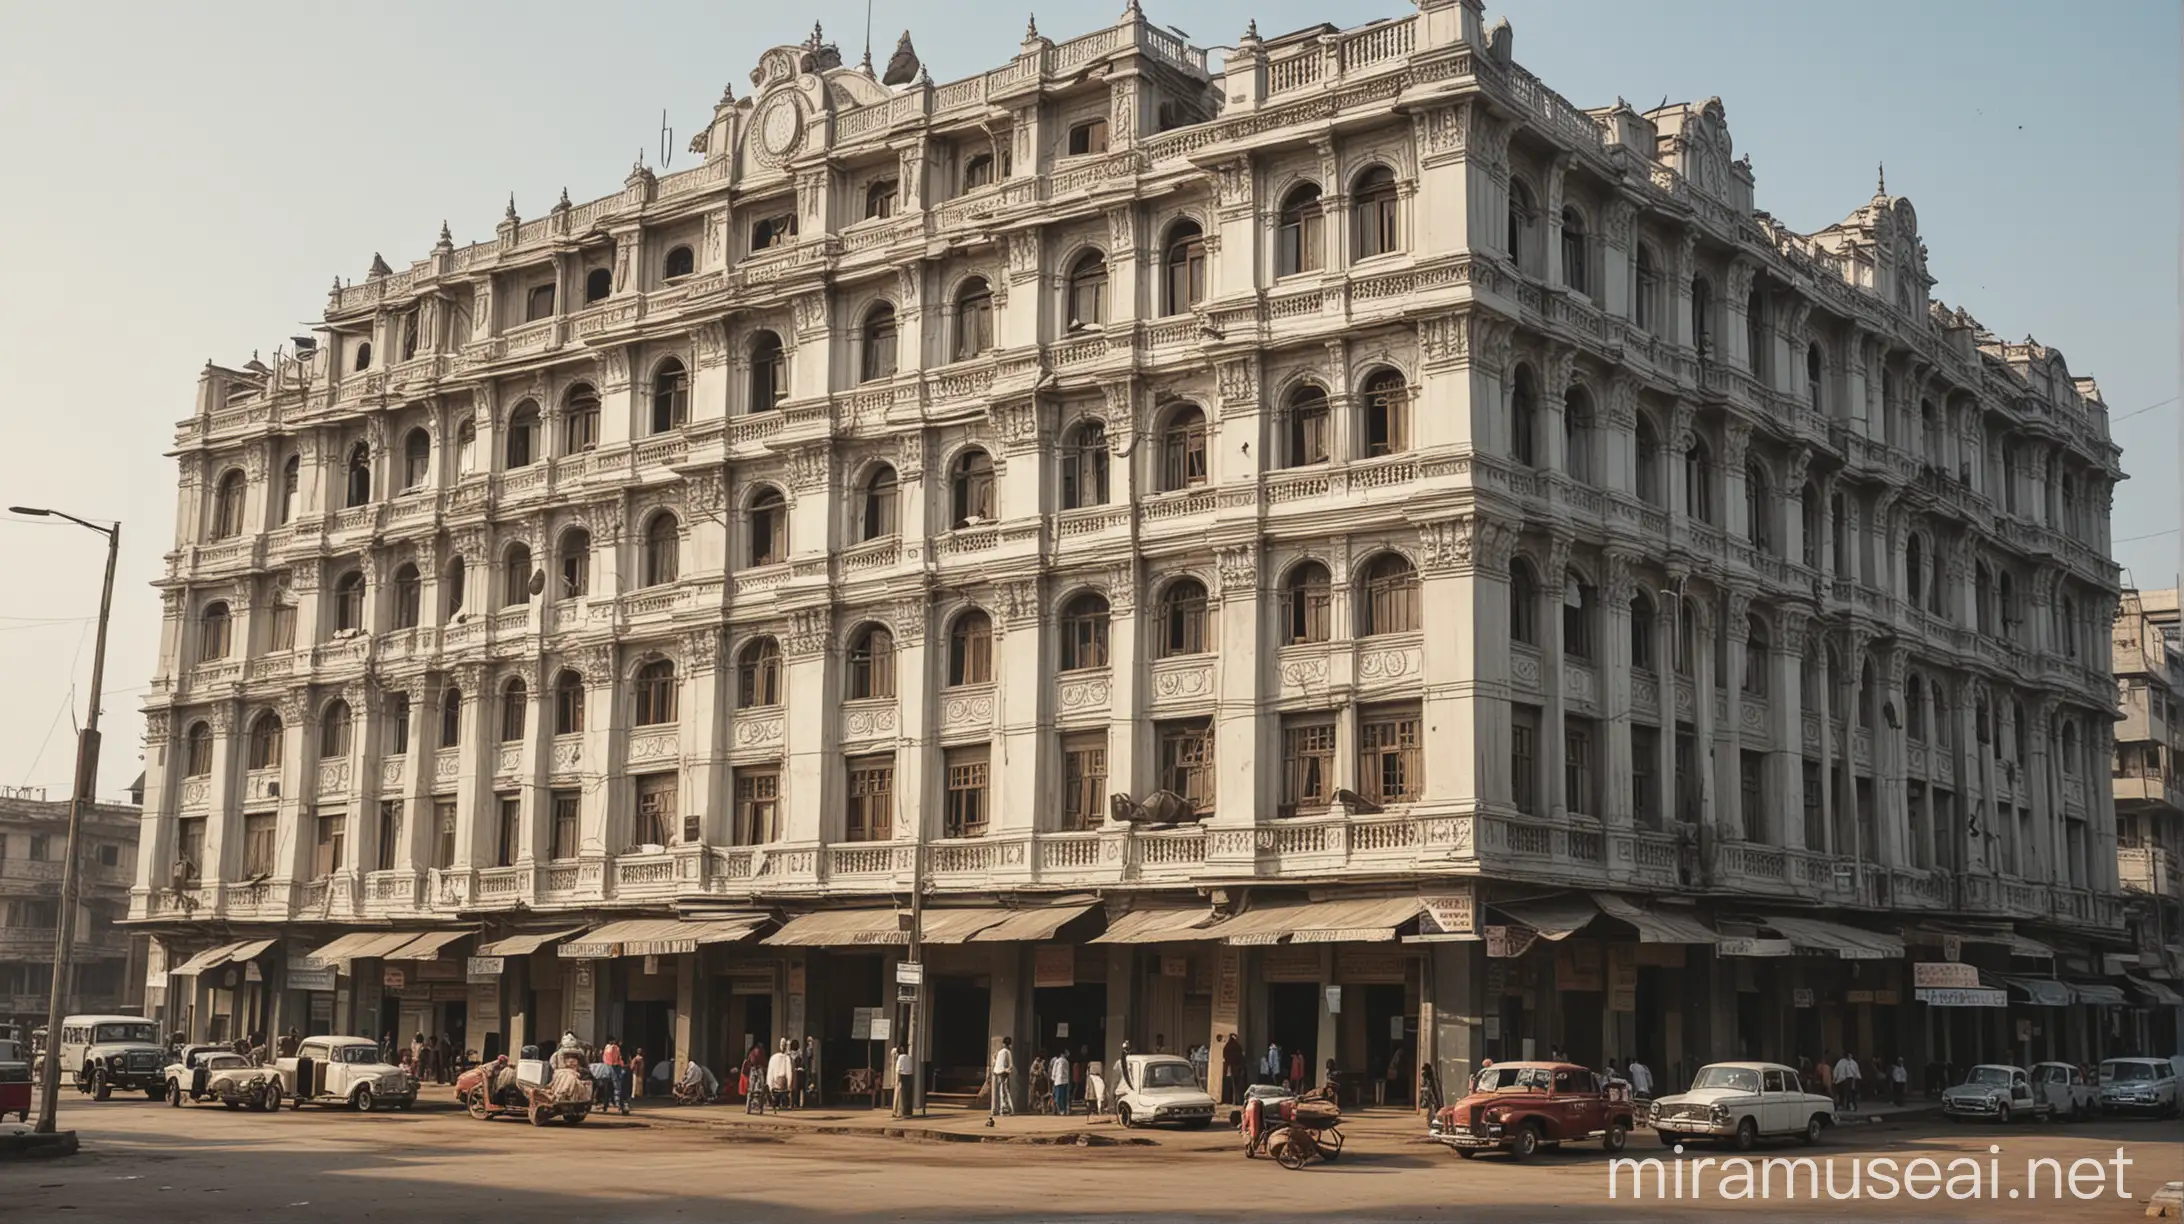 Old Kolkata hotel outside. Please make the image cartoon type.